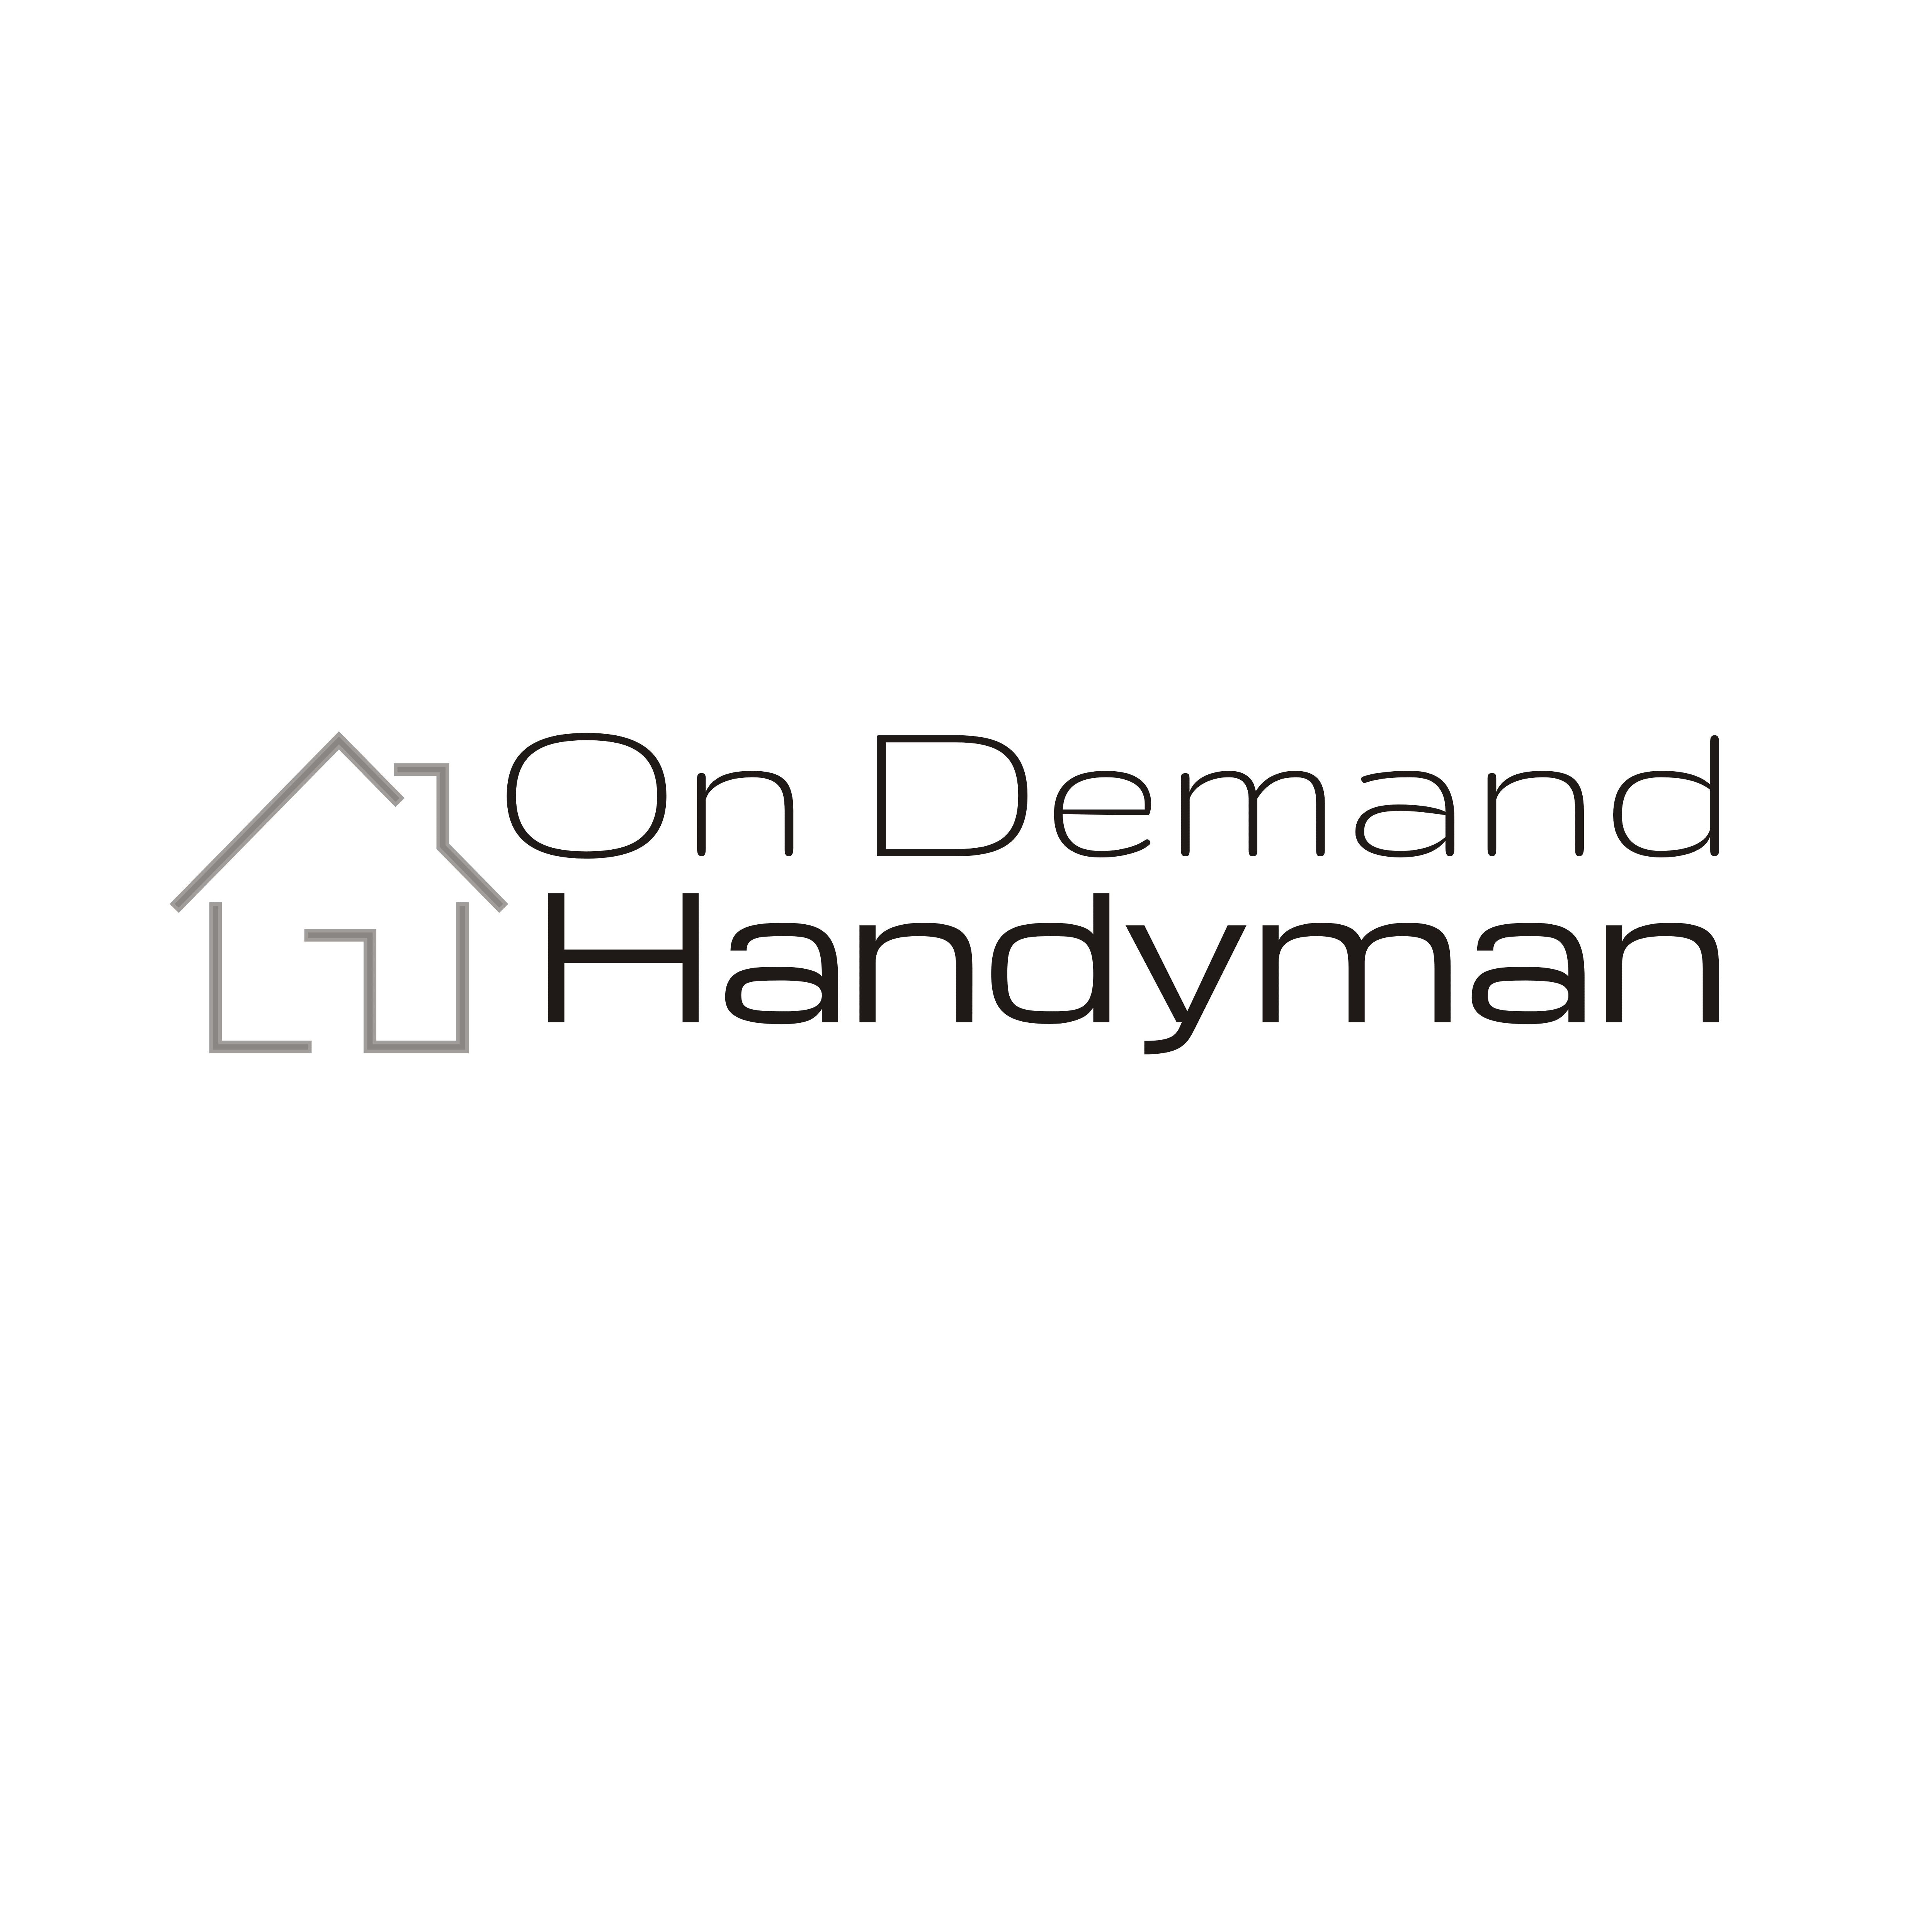 On Demand Handyman